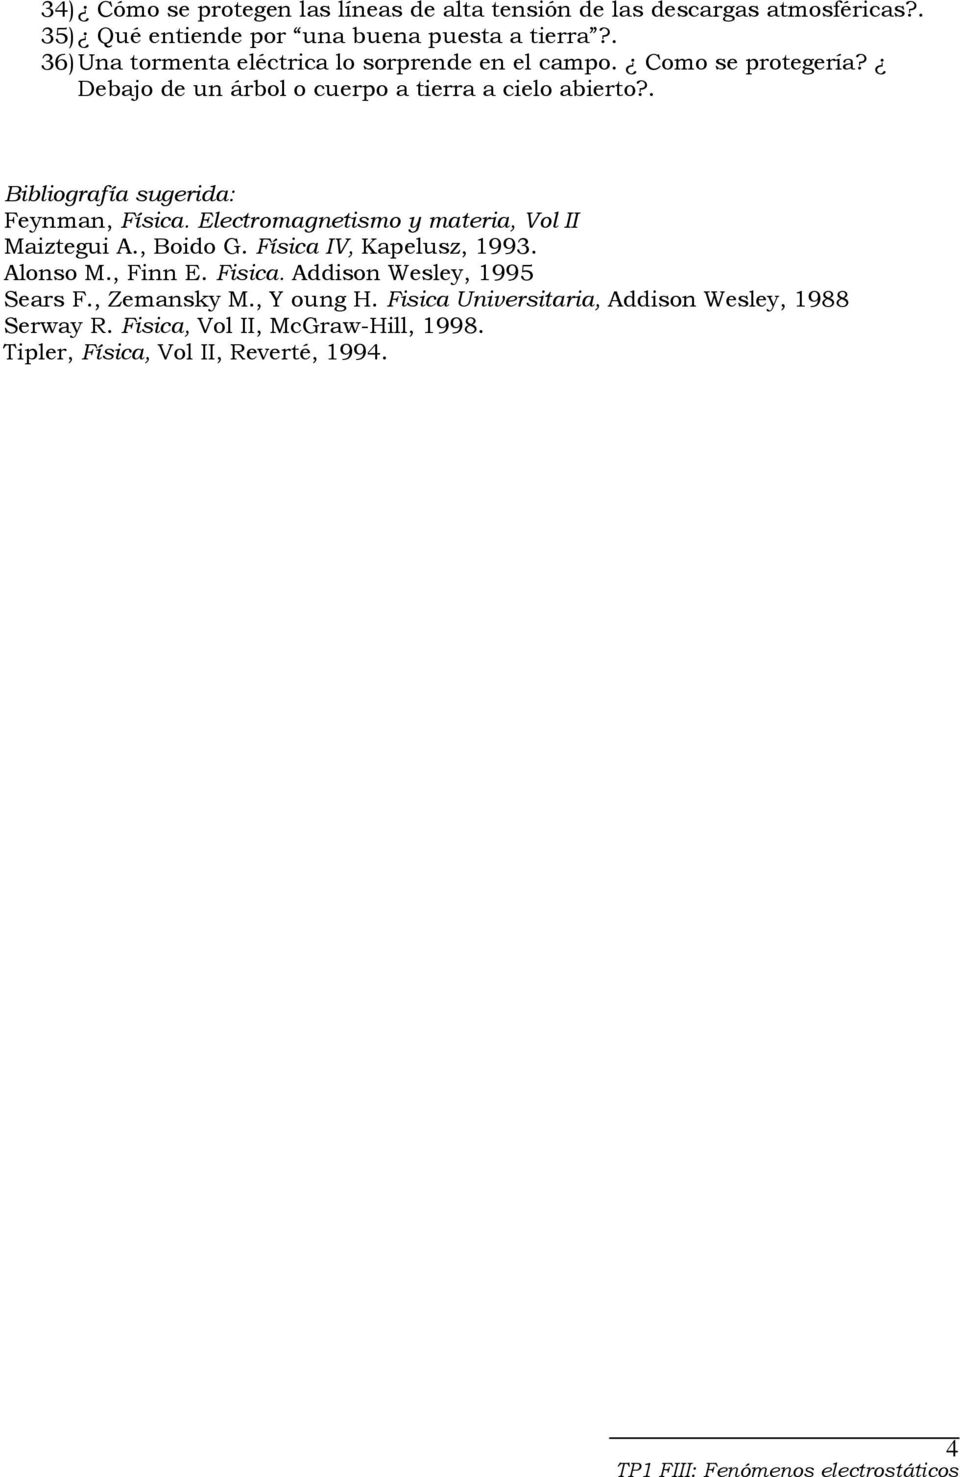 . Bibliografía sugerida: Feynman, Física. Electromagnetismo y materia, Vol II Maiztegui A., Boido G. Física IV, Kapelusz, 1993. Alonso M., Finn E.